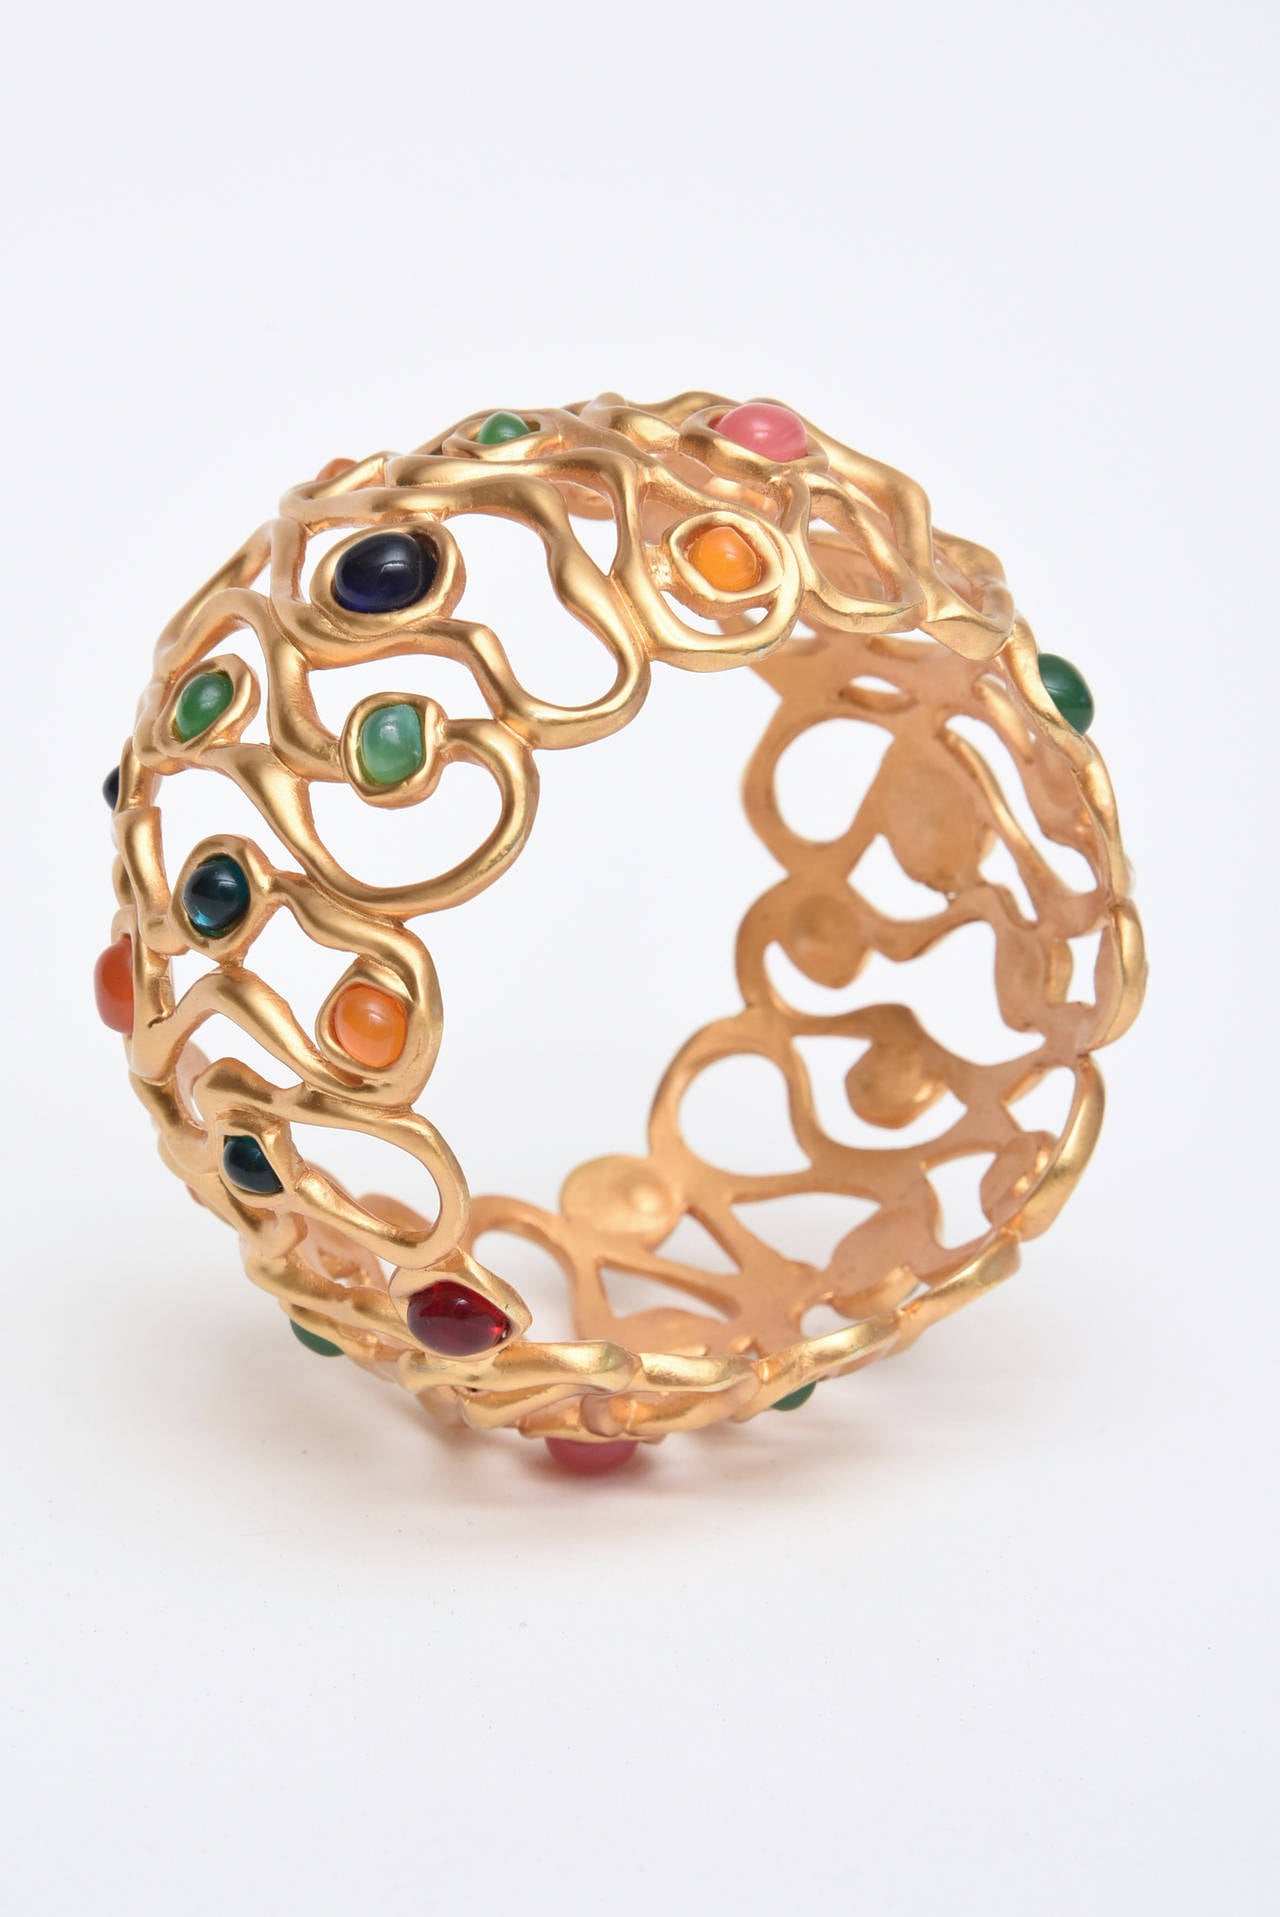 cuff bracelet with stones